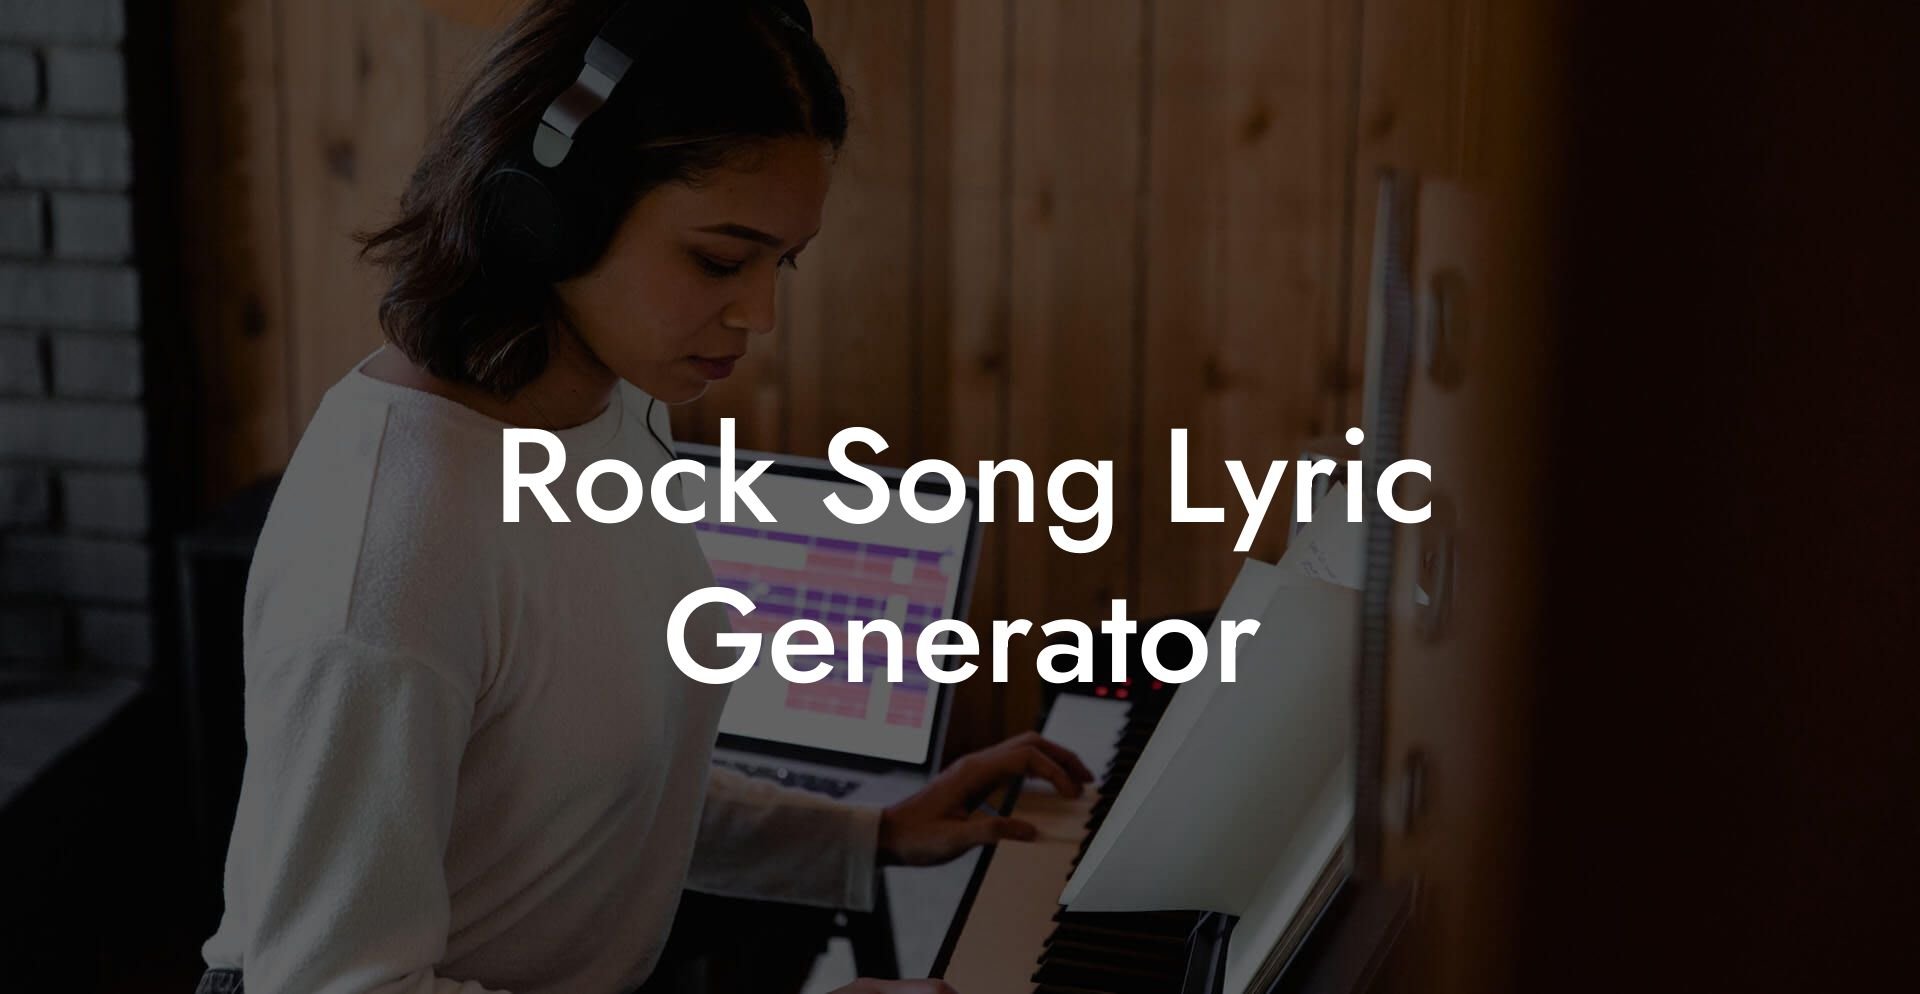 rock song lyric generator lyric assistant